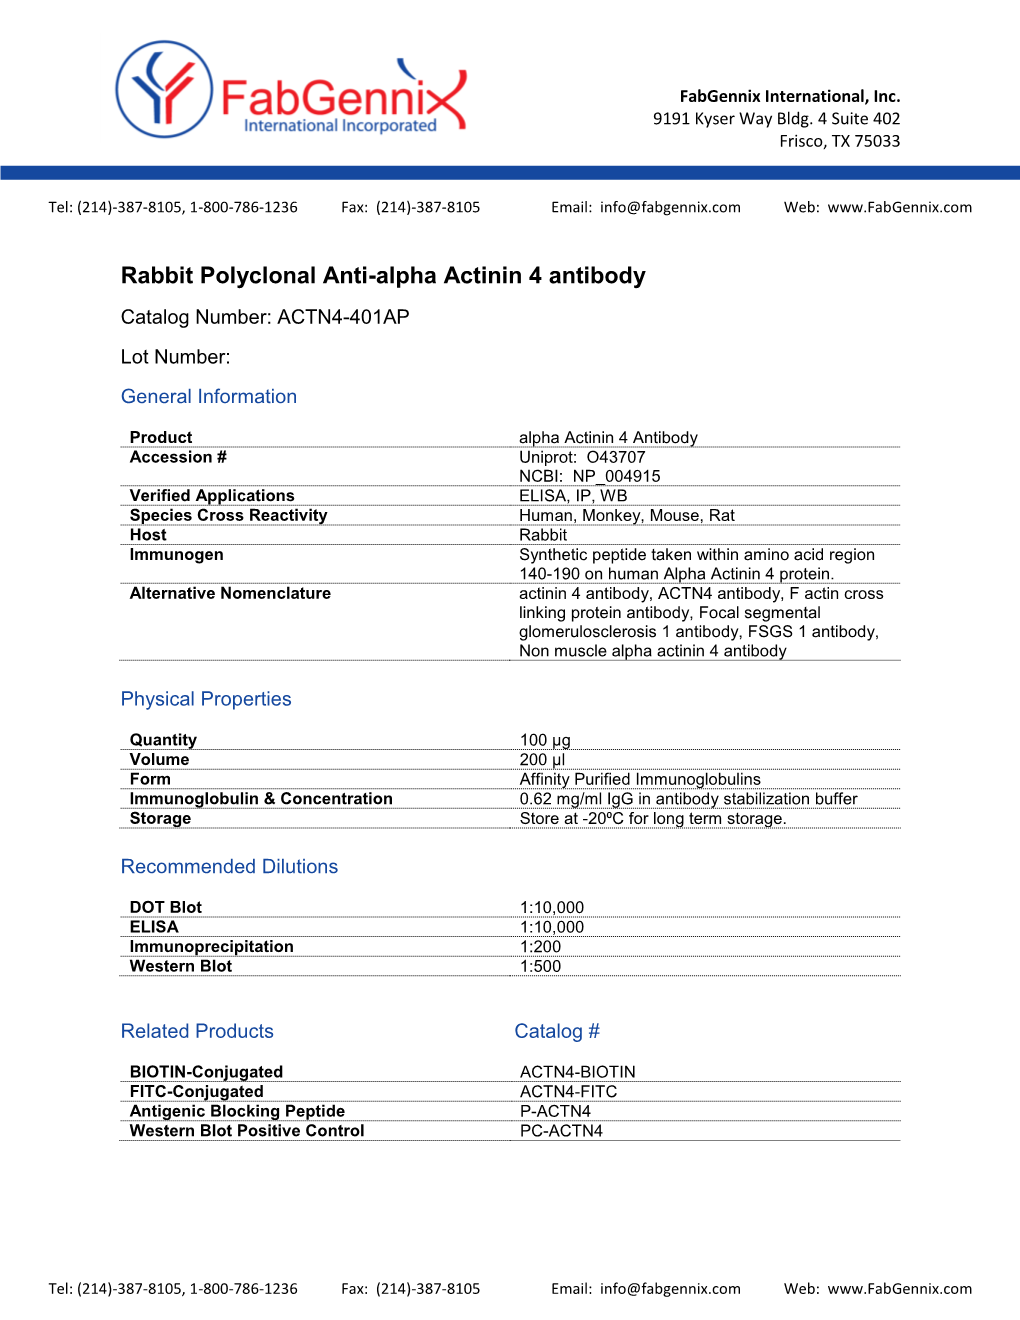 Alpha Actinin 4 Antibody Catalog Number: ACTN4-401AP Lot Number: General Information